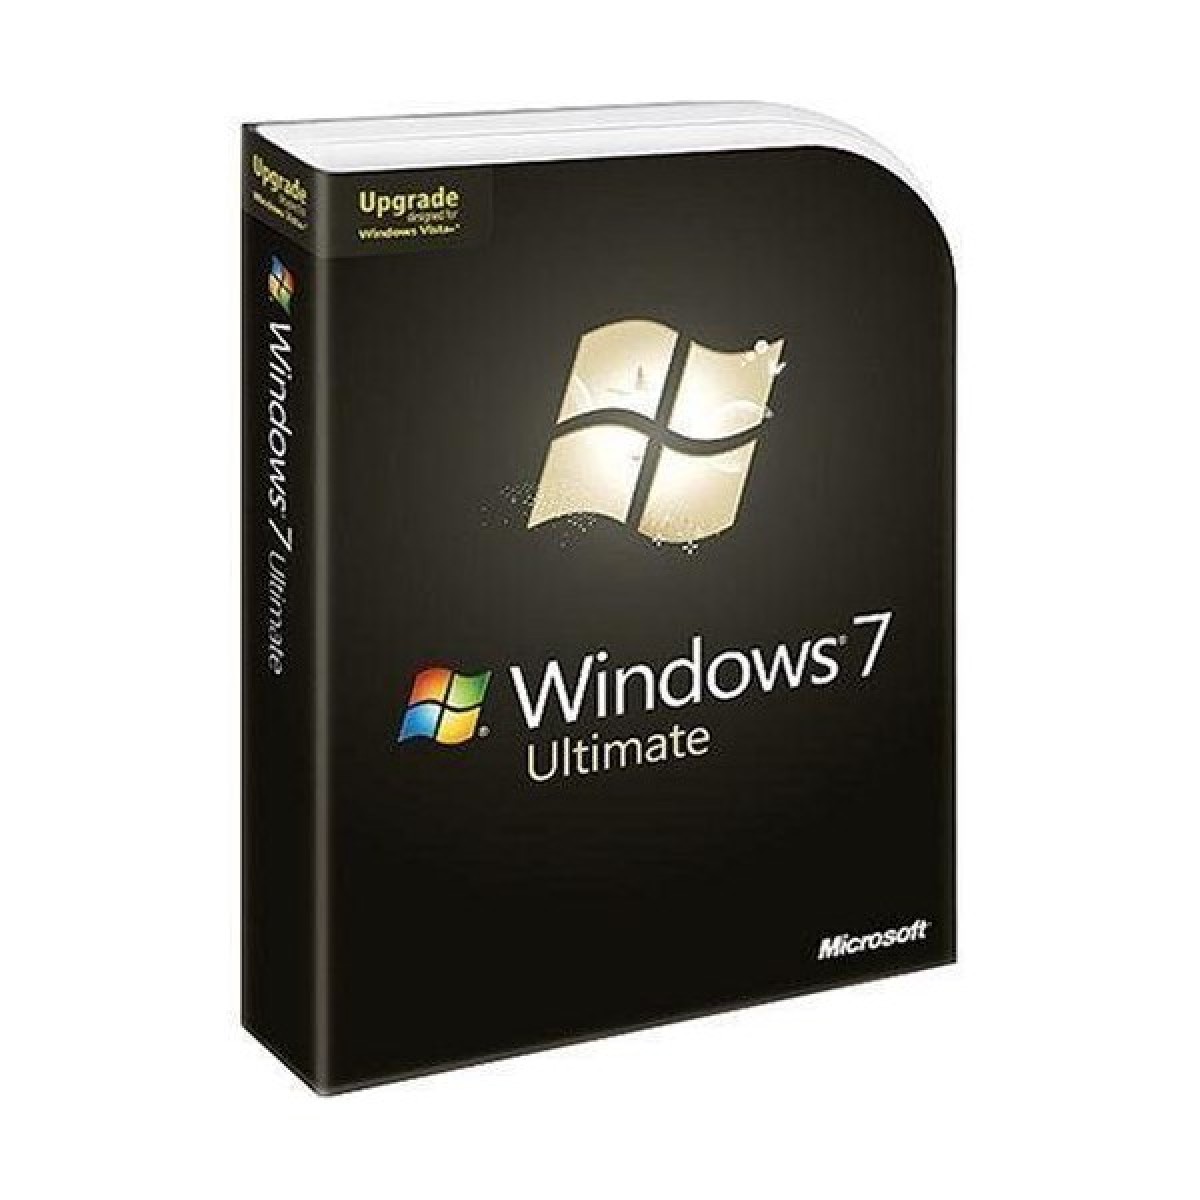 Windows 7 ultimate 64 bit product key